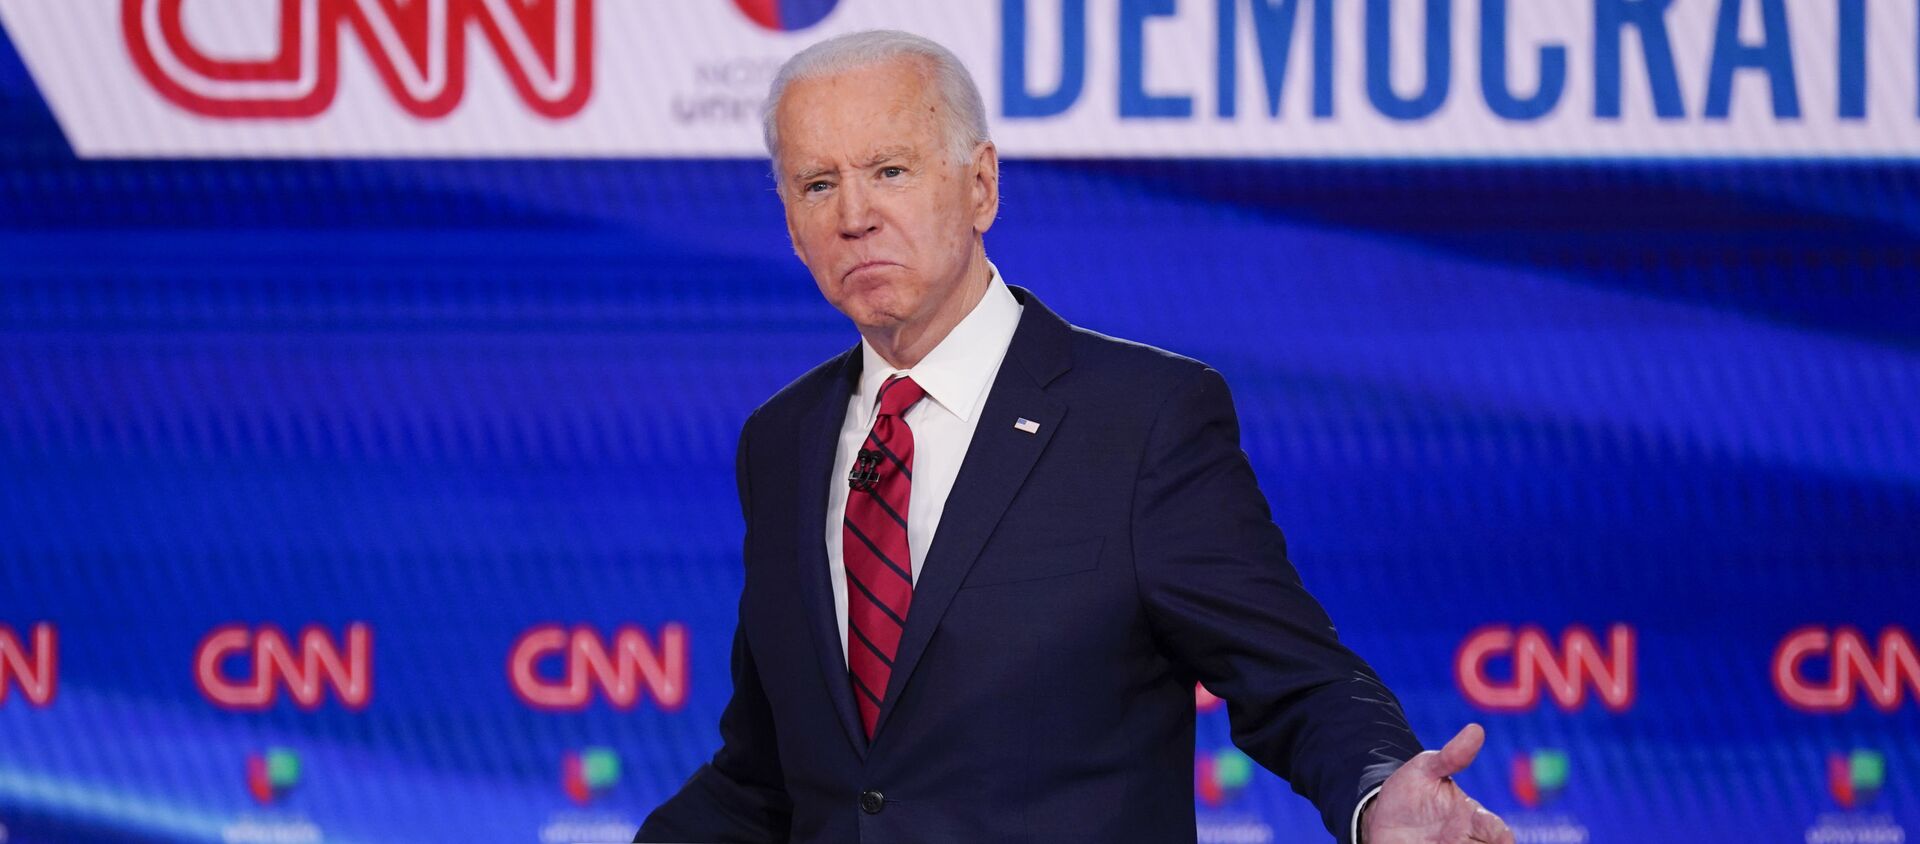 Former Vice President Joe Biden, participates in a Democratic presidential primary debate at CNN Studios in Washington, Sunday, March 15, 2020 - Sputnik International, 1920, 20.08.2021